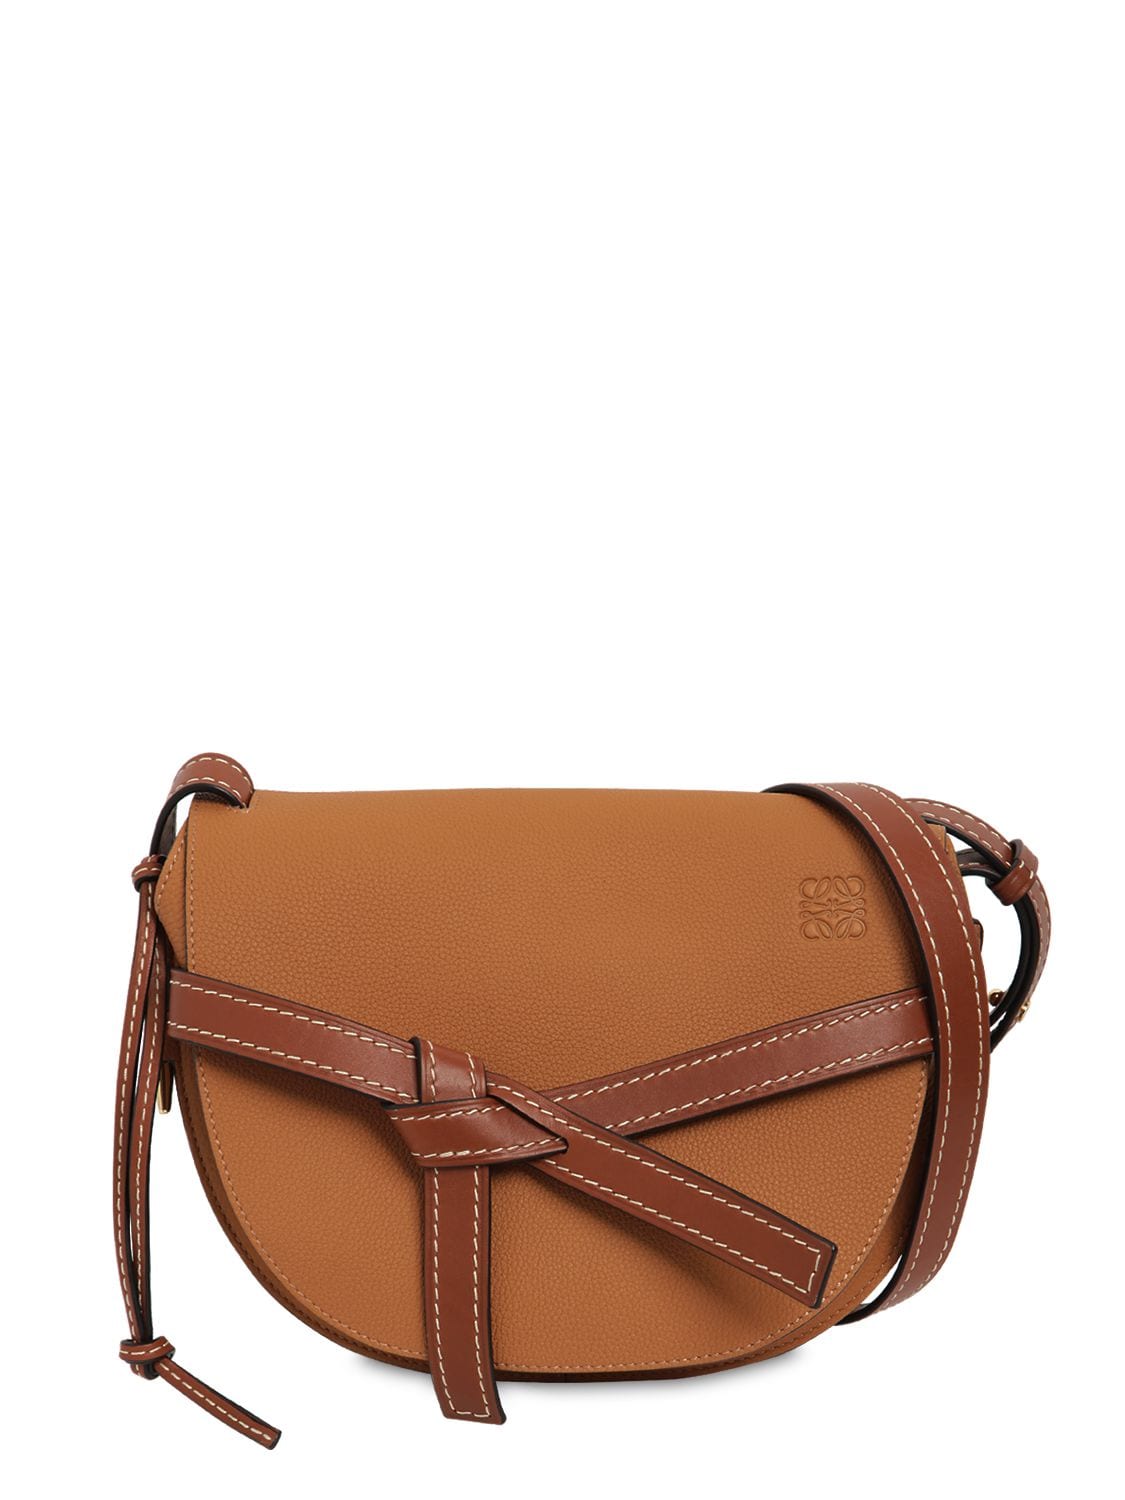 Loewe Gate Small Leather Bag In Tan | ModeSens